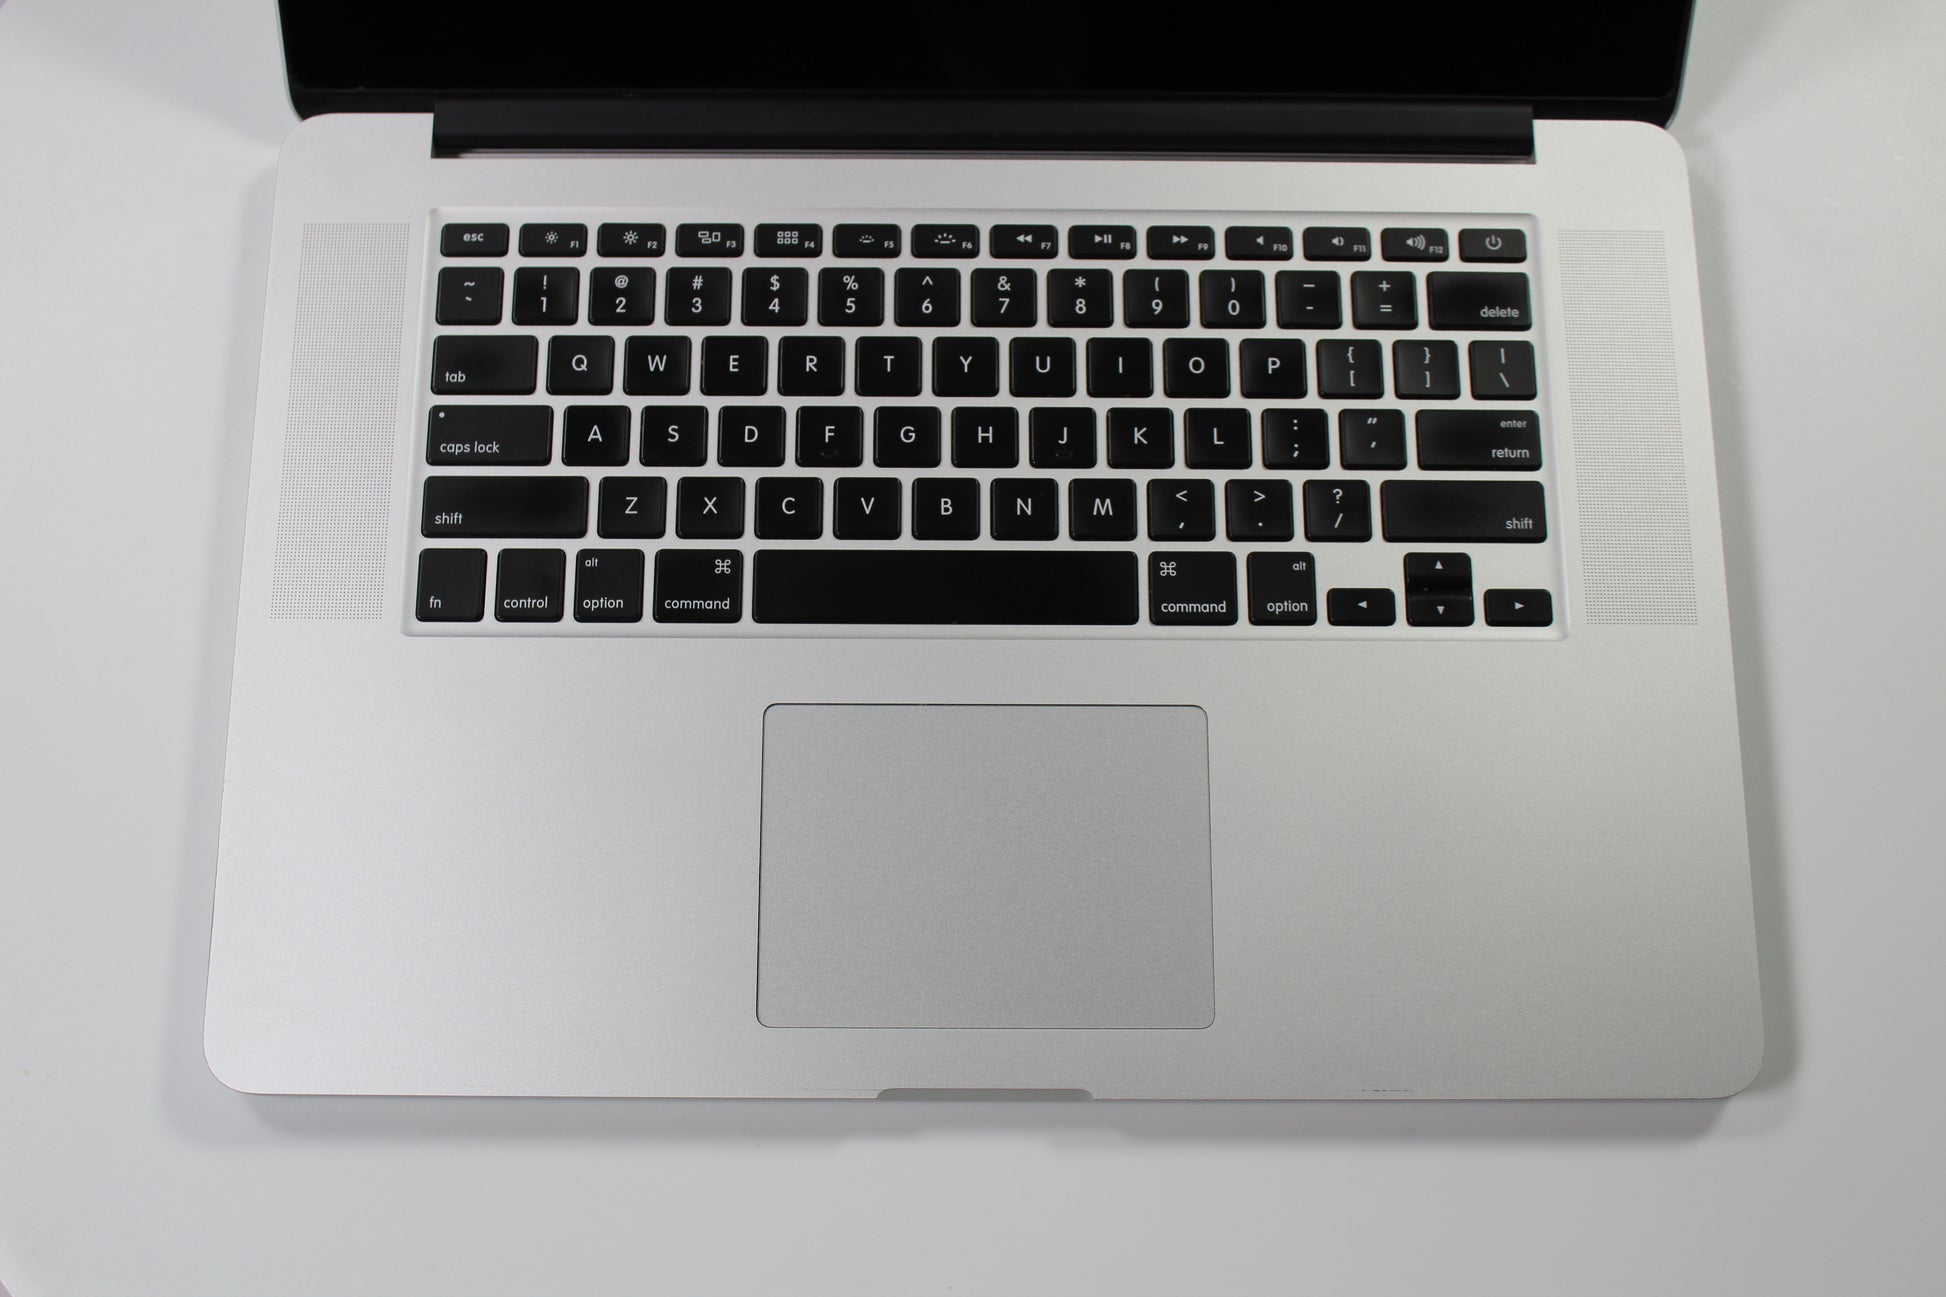 Apple MacBook Pro 15-inch 2013 2.6GHz Core i7 16GB RAM Dual GPU (Wear & Tear Special)